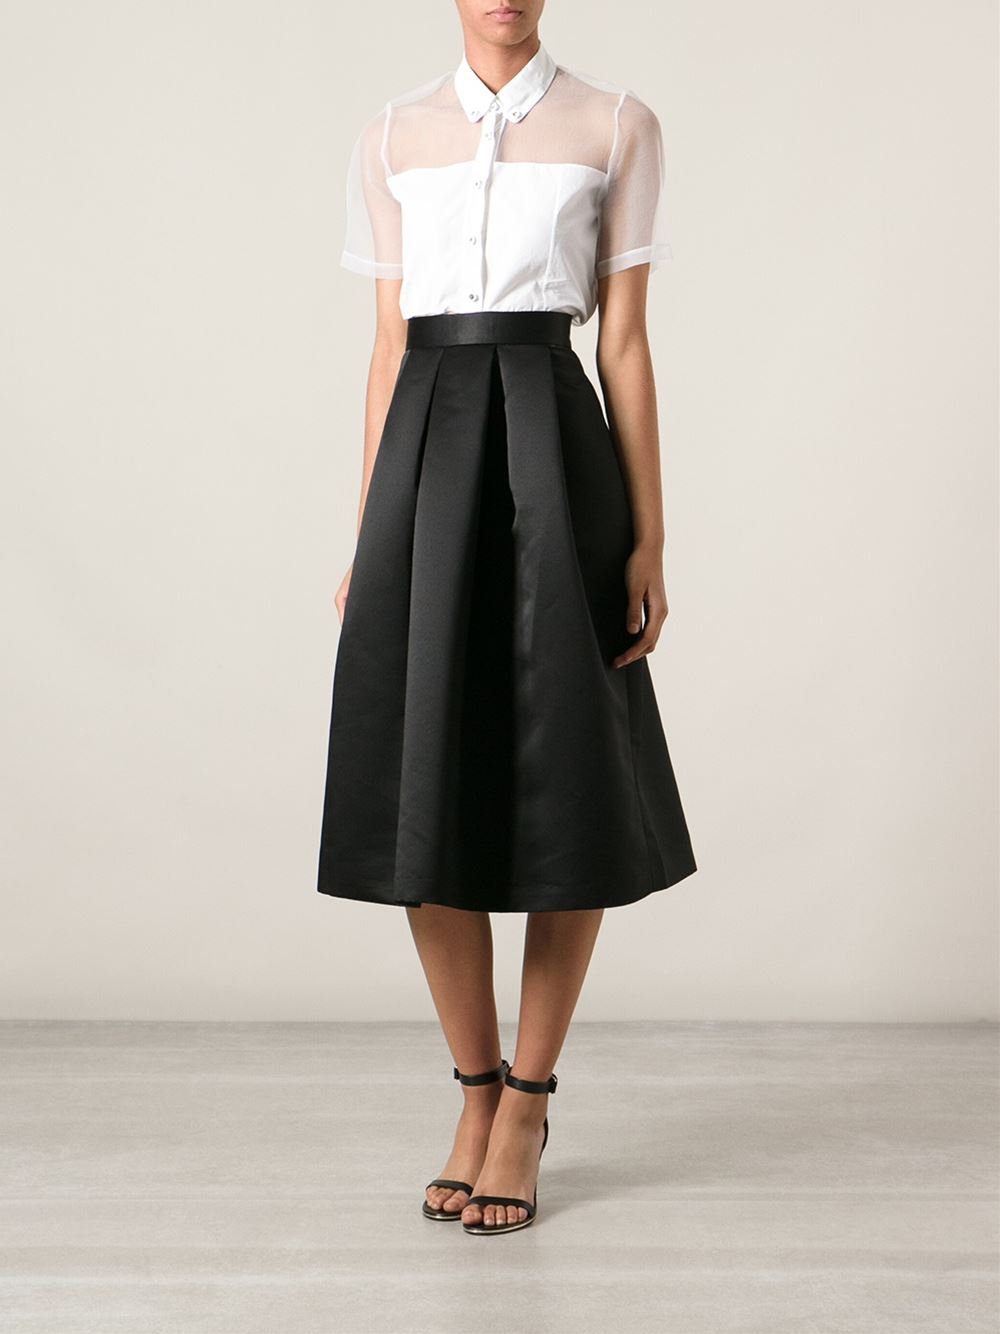 Lyst - Lulu & Co Satin Box Pleated Skirt in Black